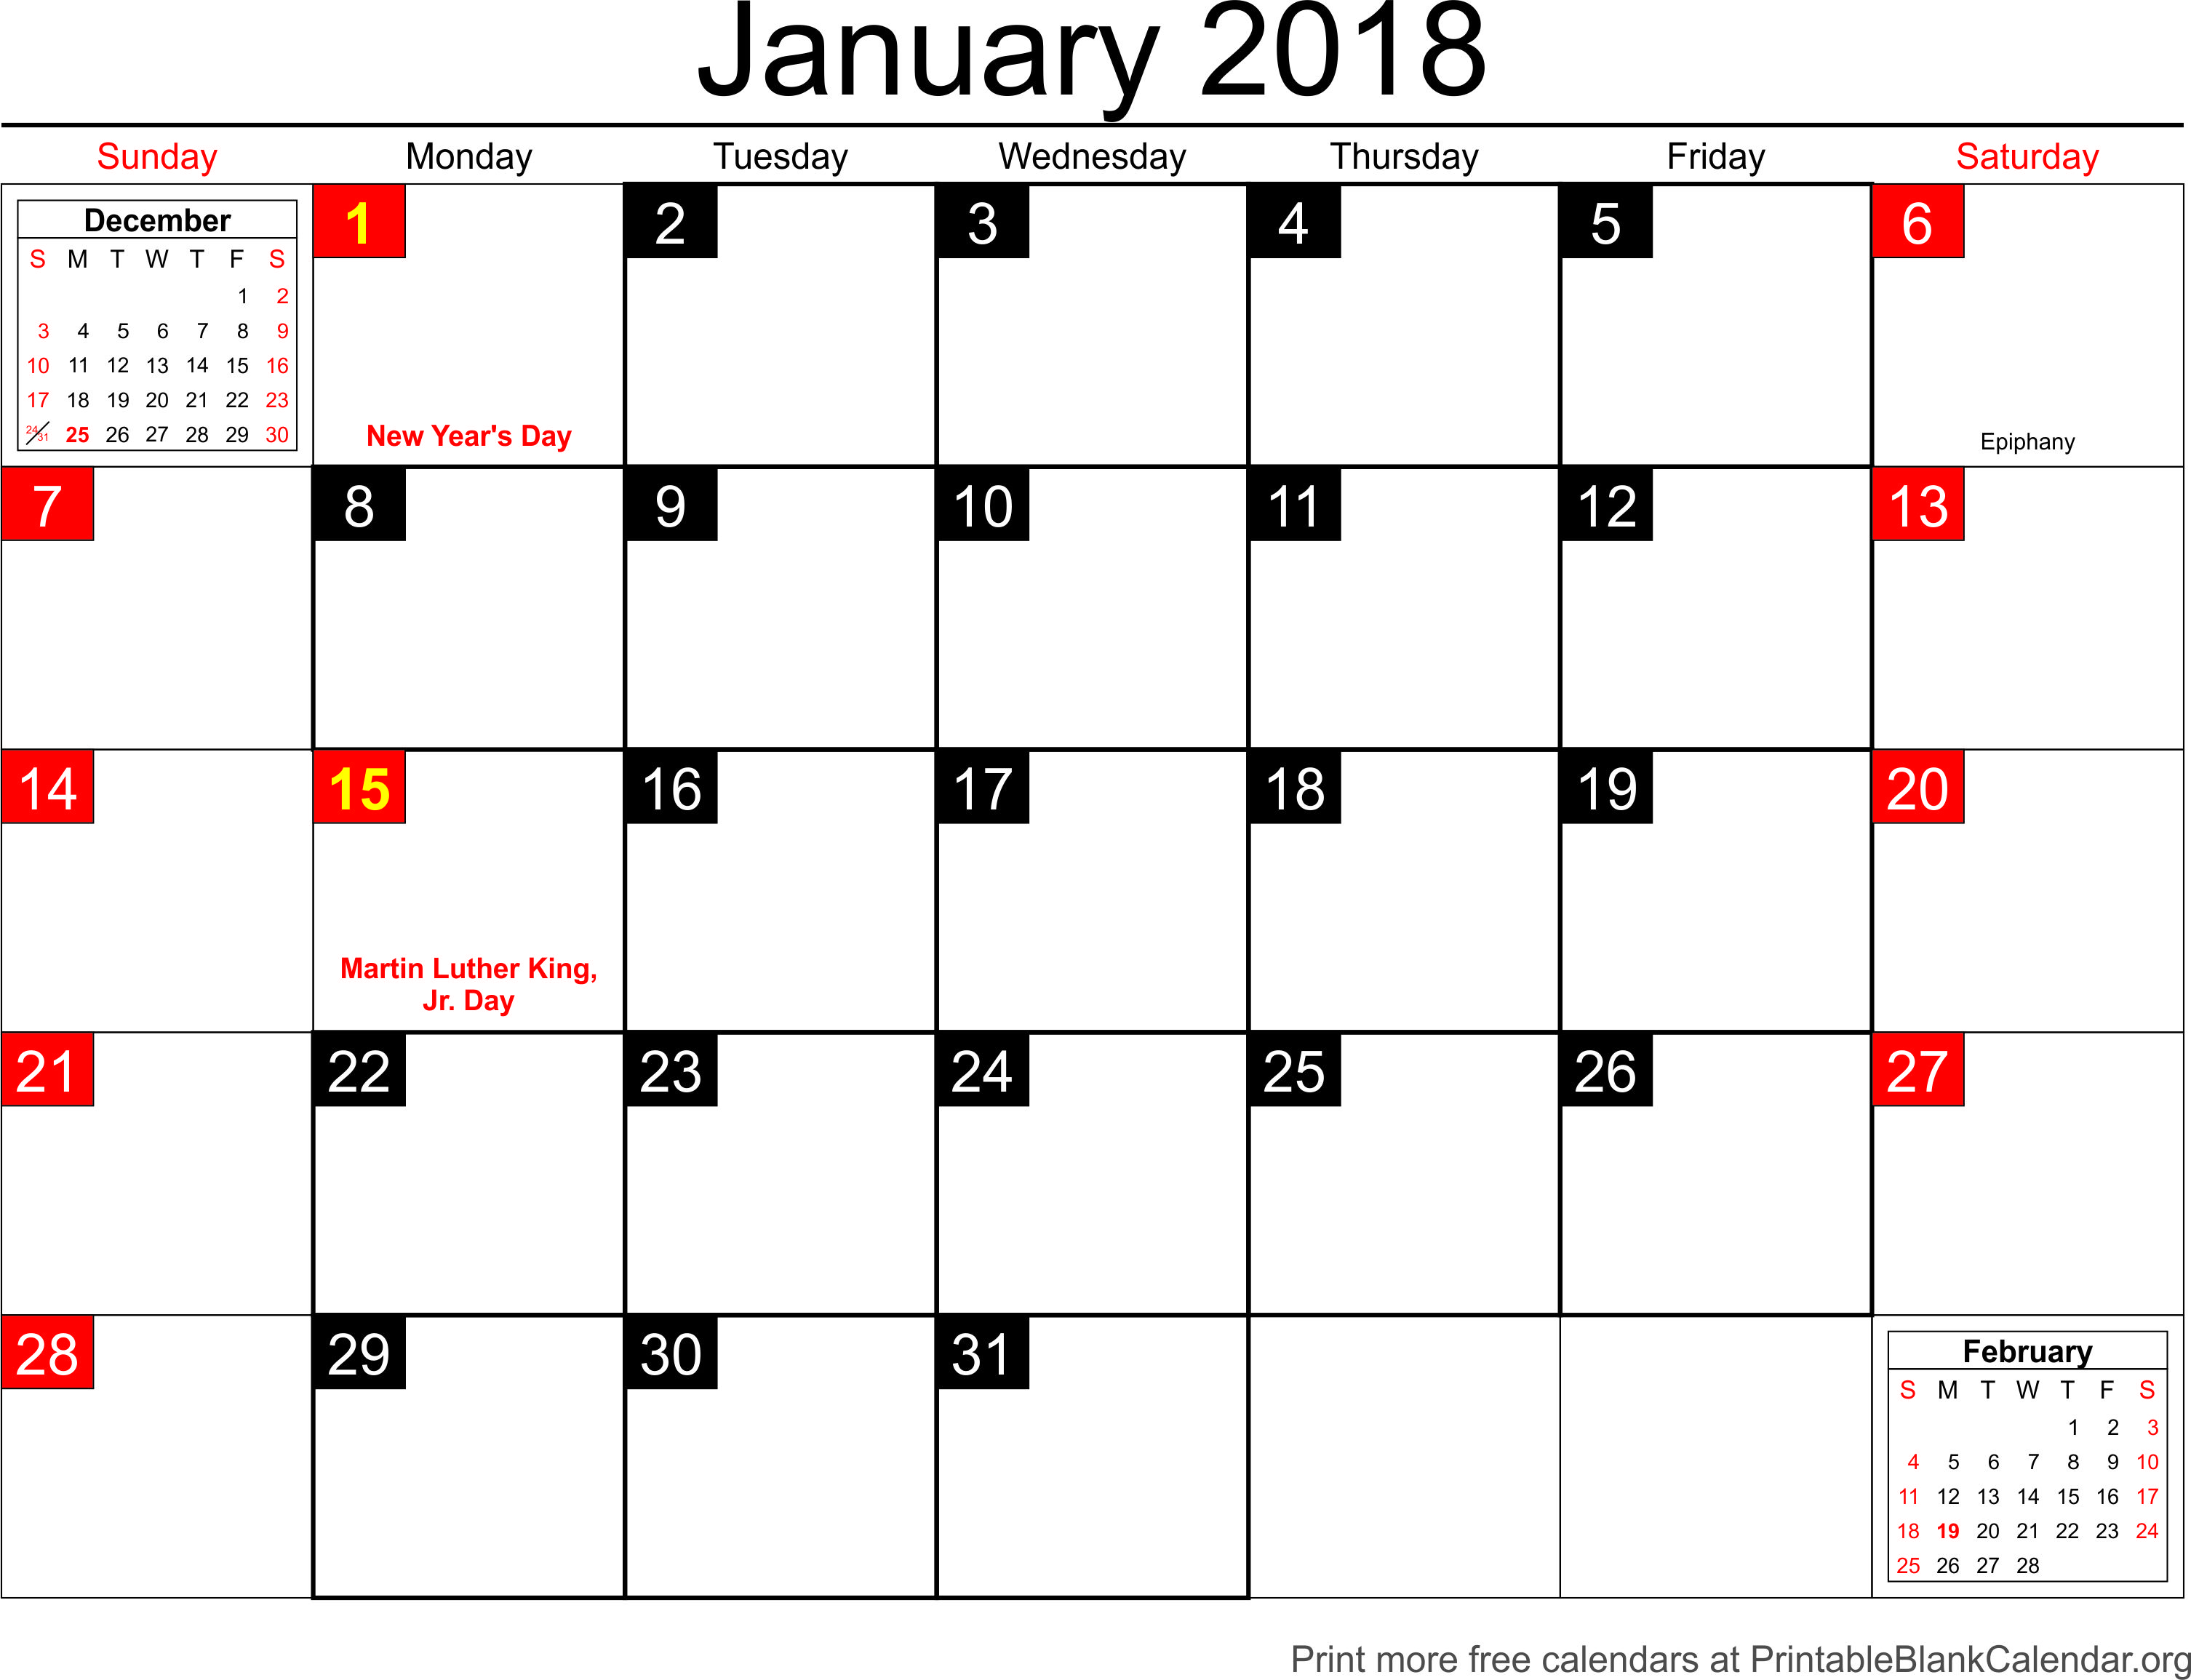 january-2018-calendar-56-calendar-templates-of-2018-calendars